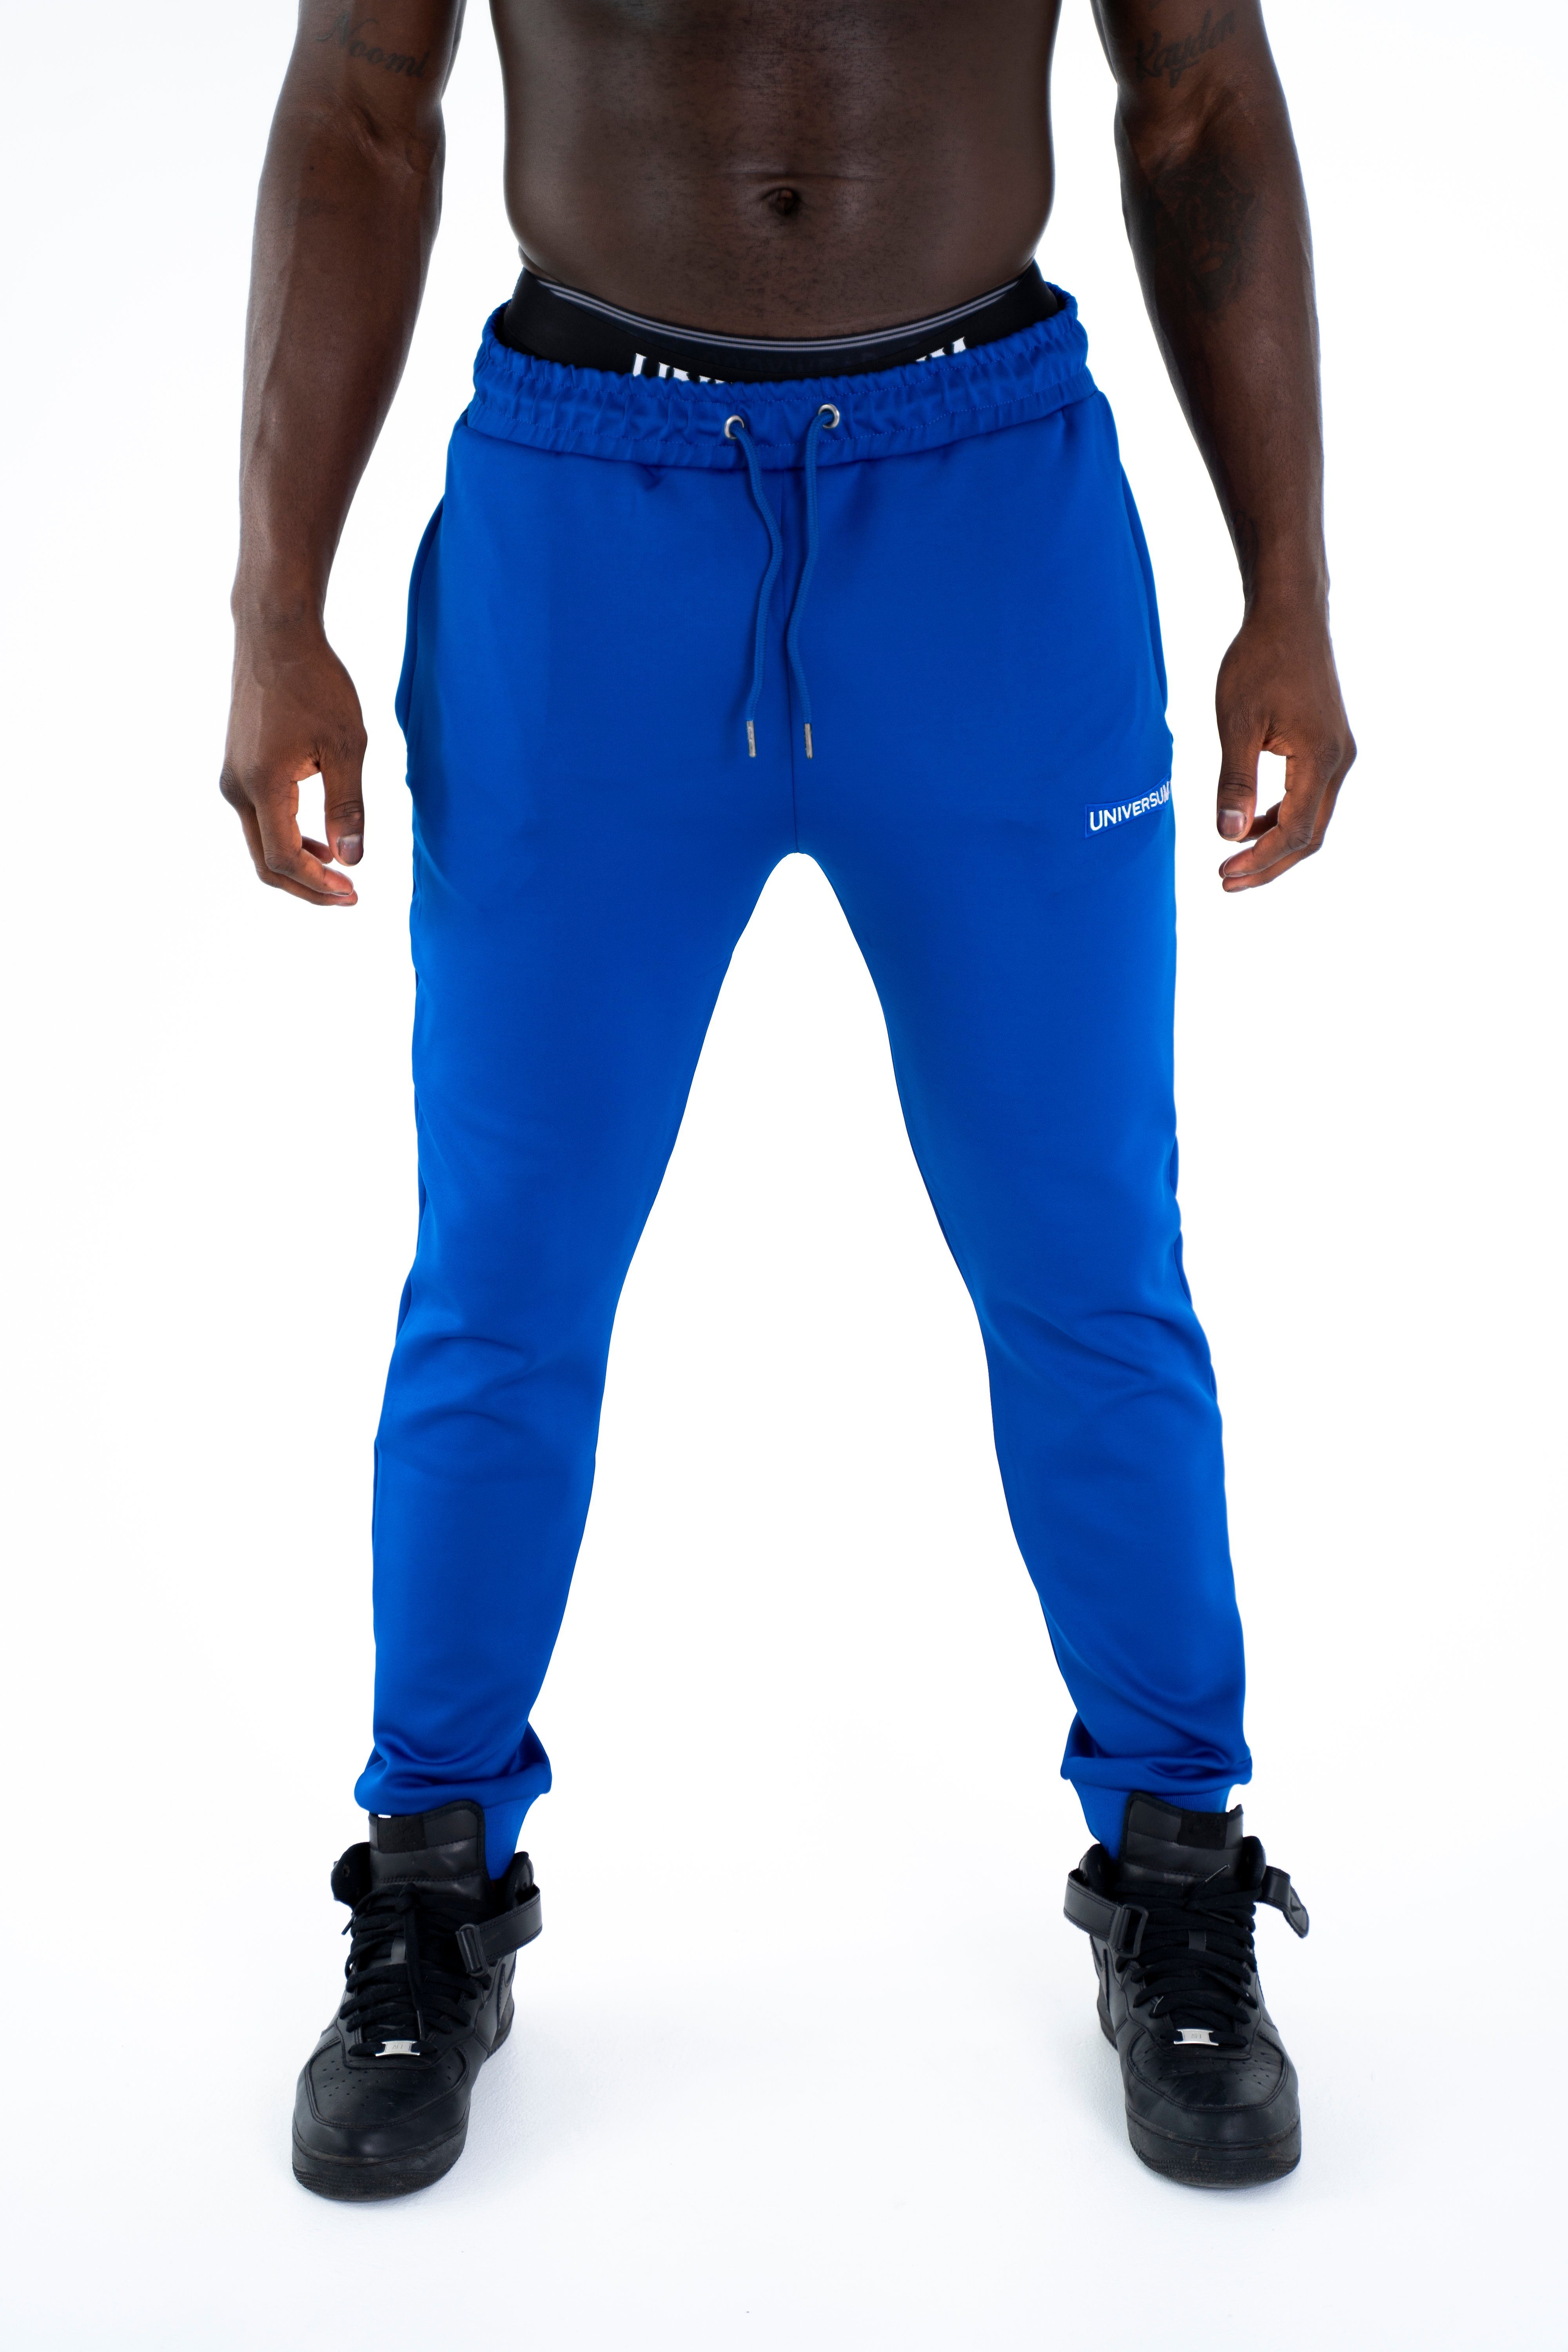 Jogginghose Fit Fitness Freizeit Modern Pants Jogginghose Sport, blau und Sportwear Universum für